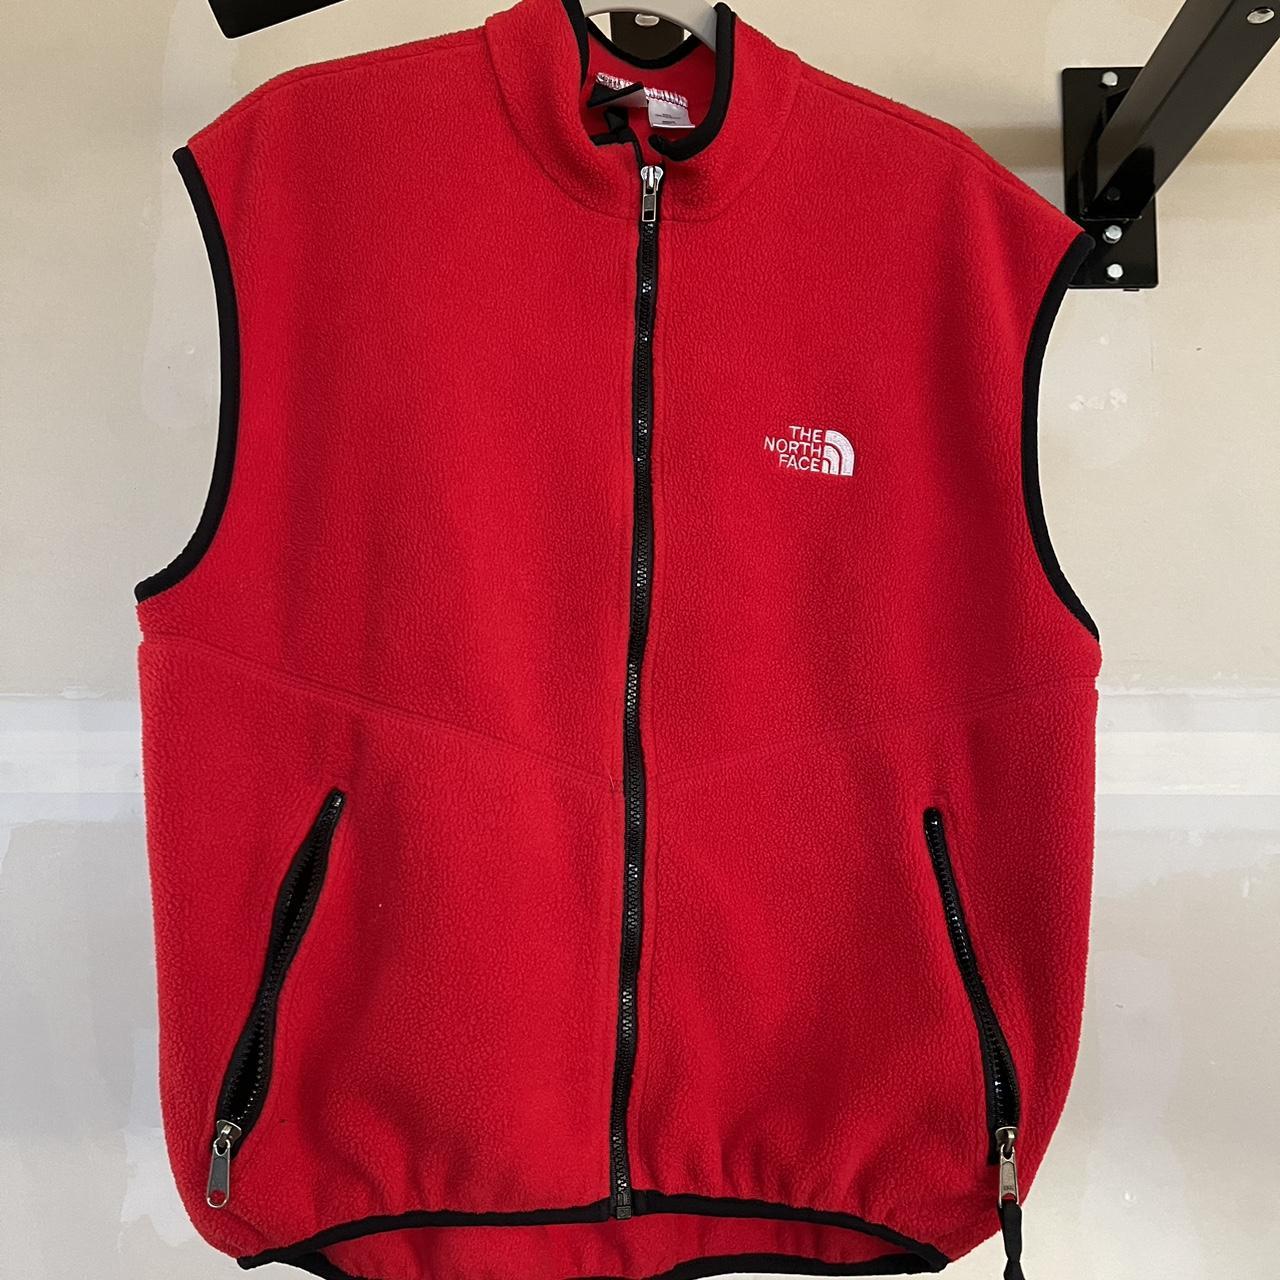 Basic Editions Red Fleece Vest